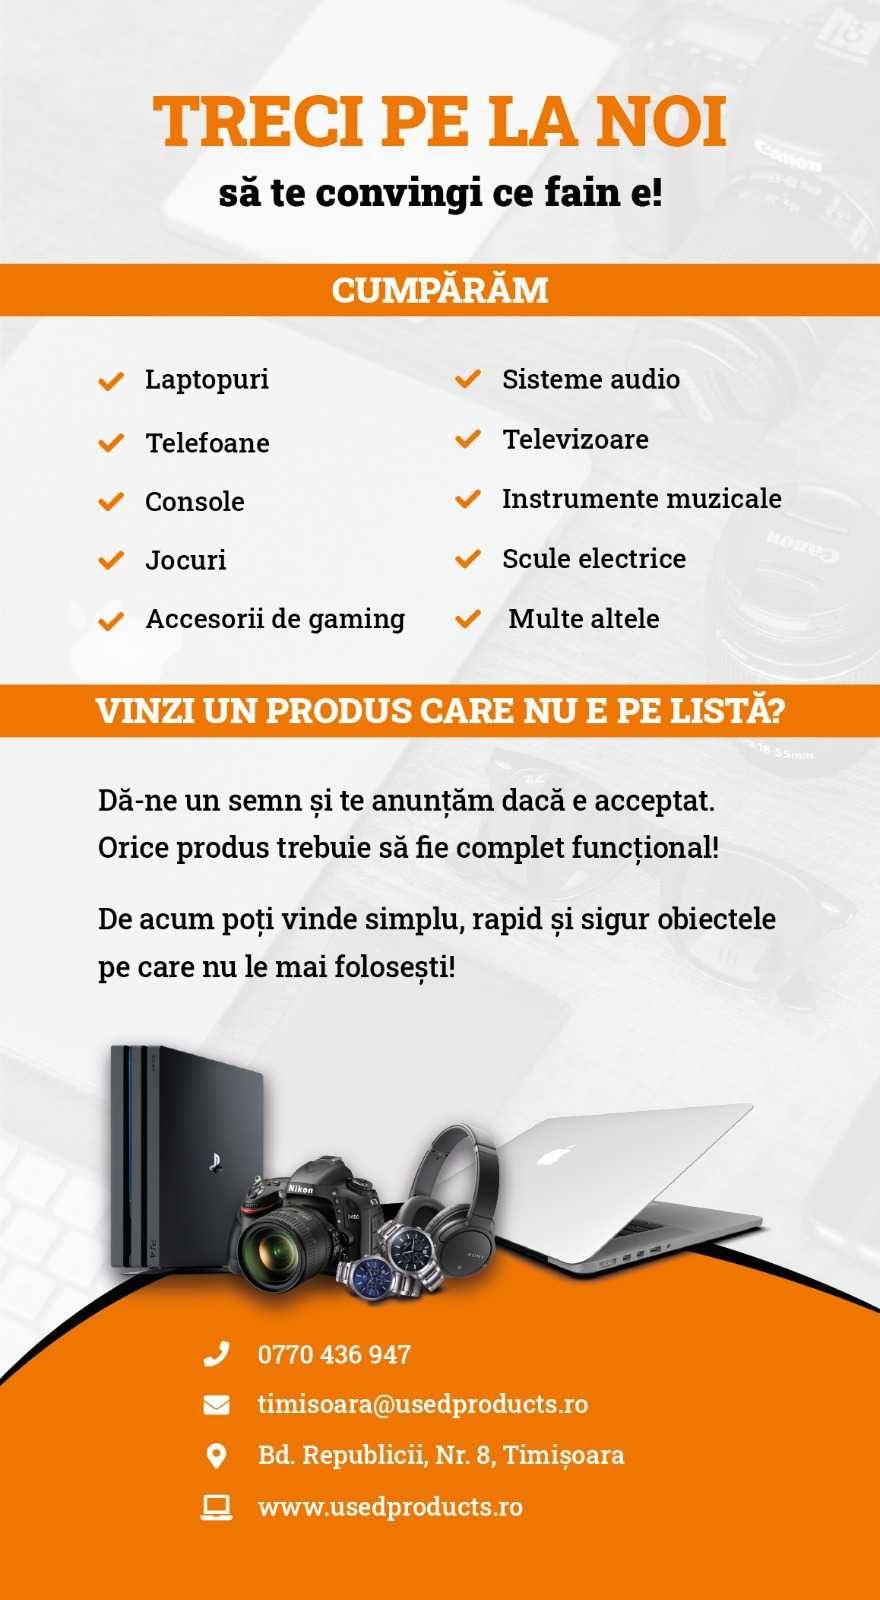 Consola Xbox ONE |Jocuri & Console, Garantie 12 Luni | UsedProducts.ro